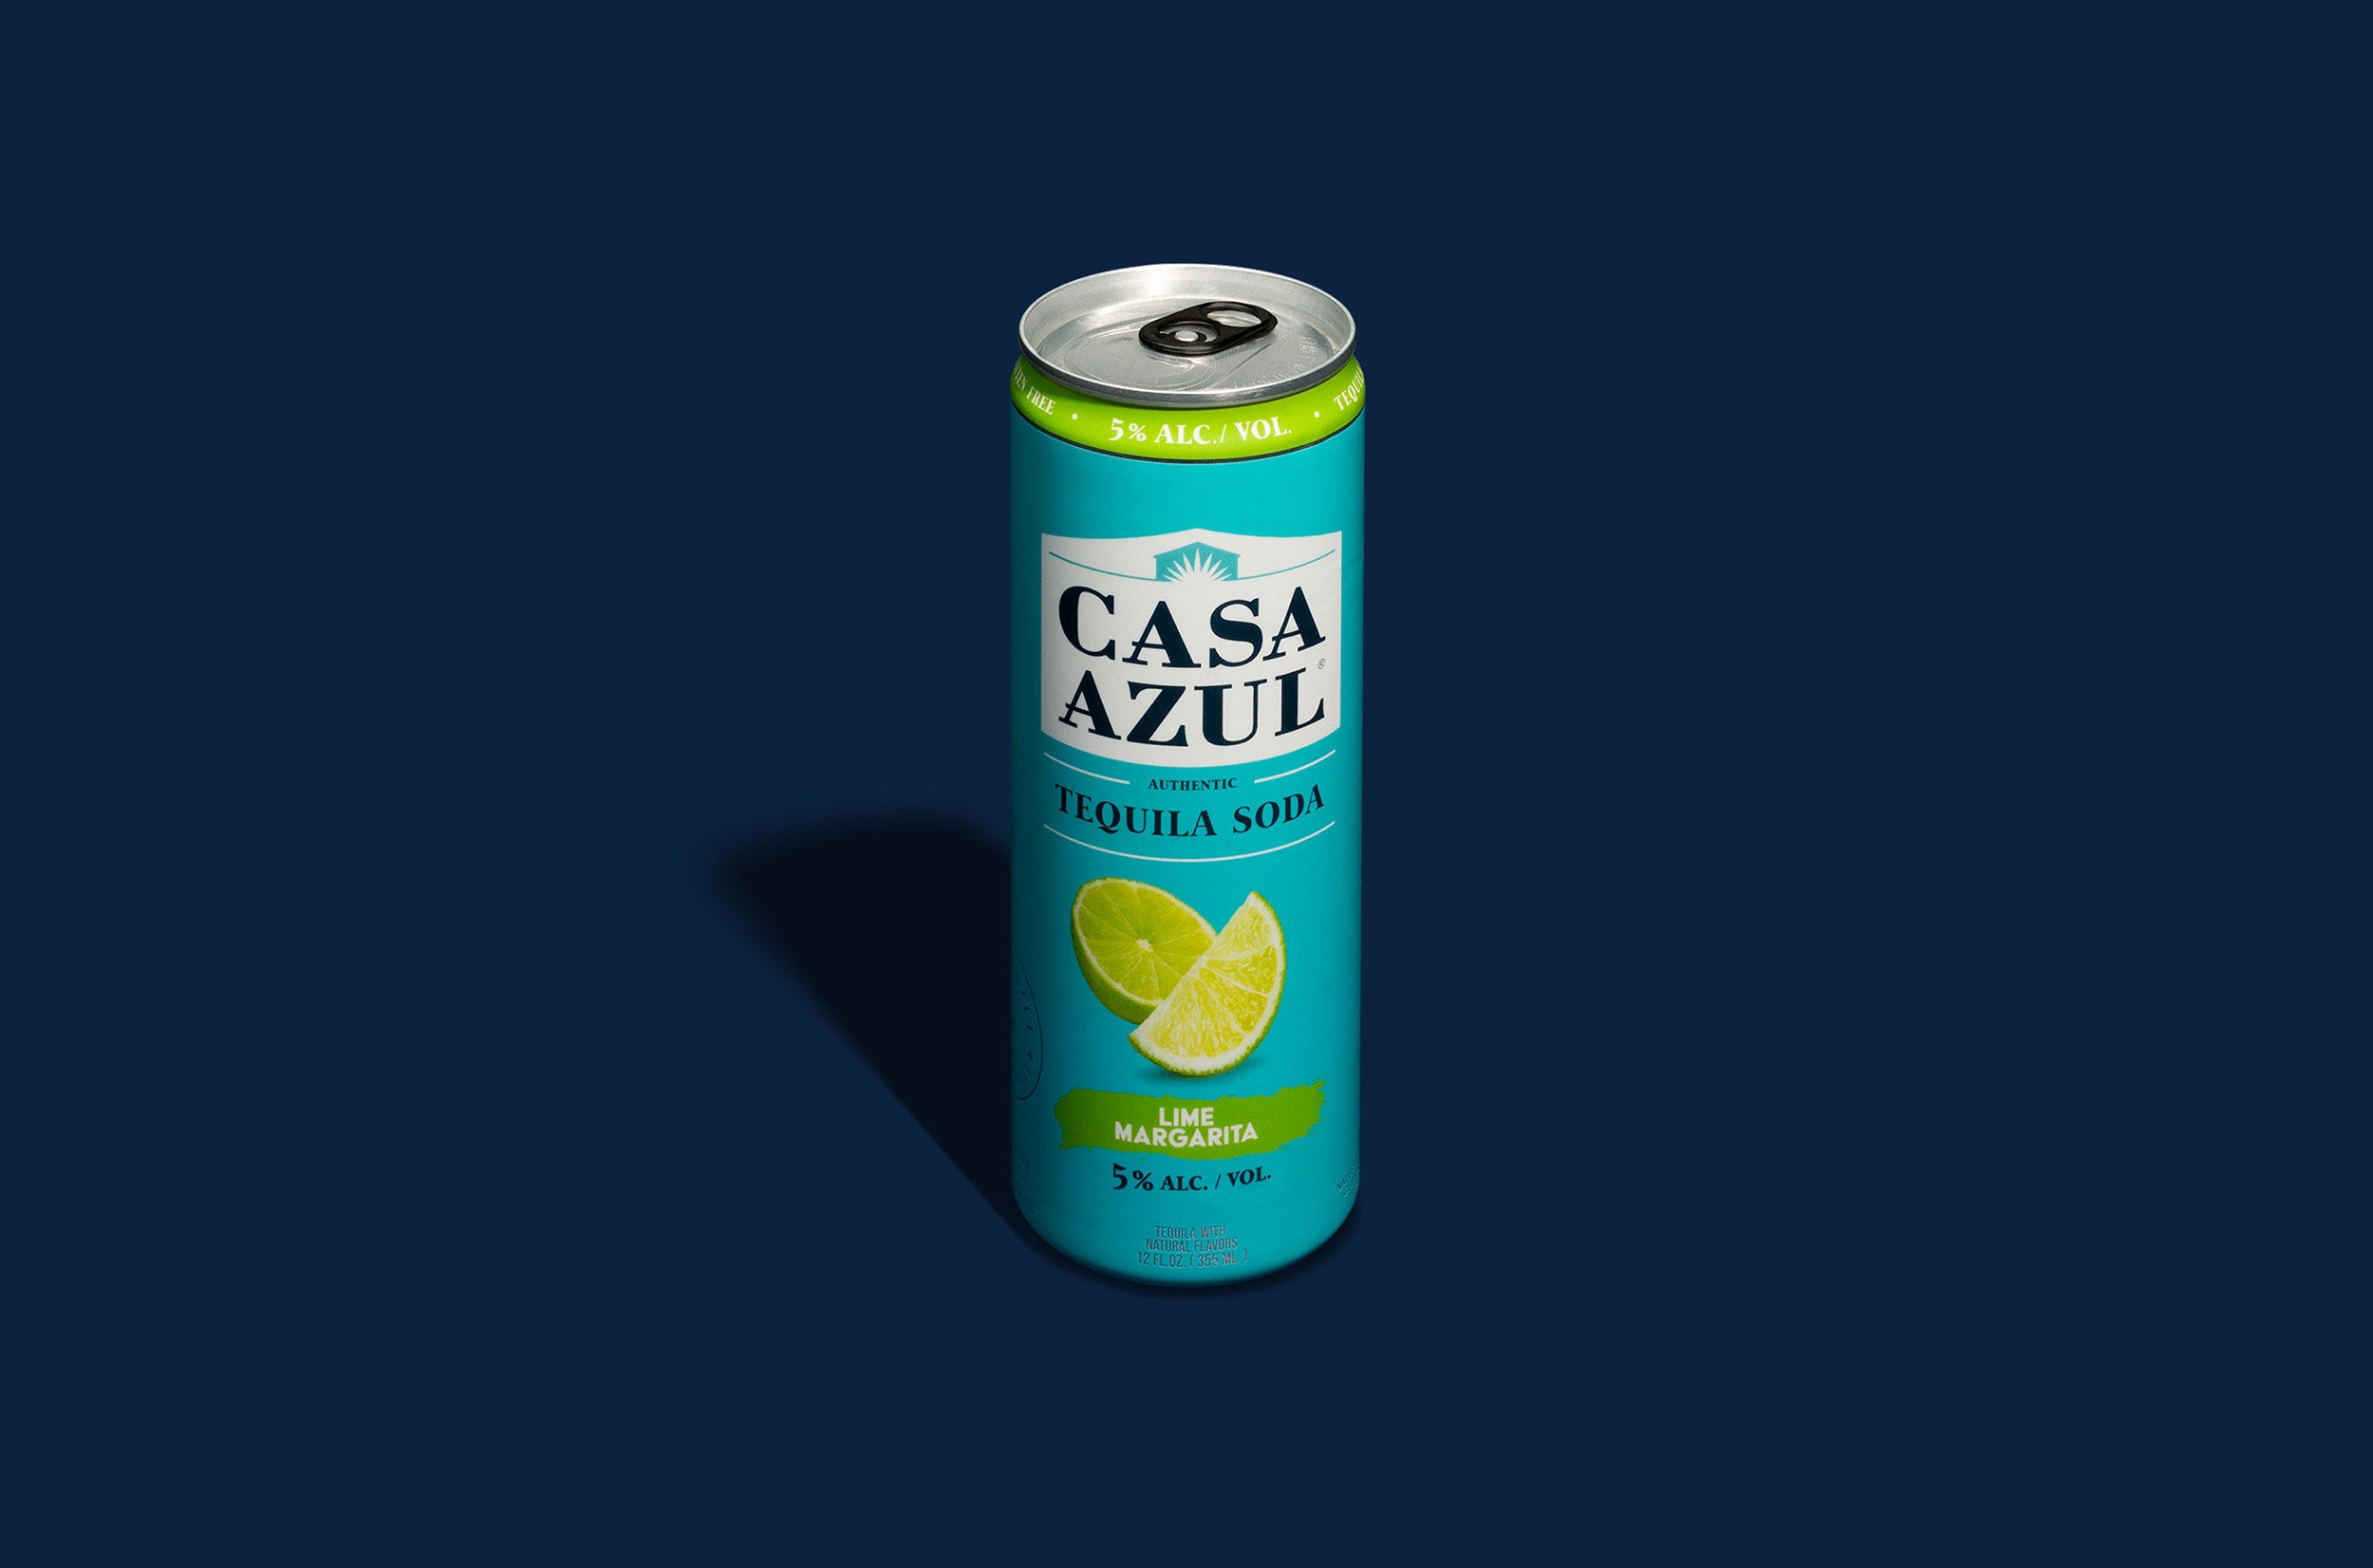 Casa Azul lime margarita tequila soda can. 5% alcohol per volume